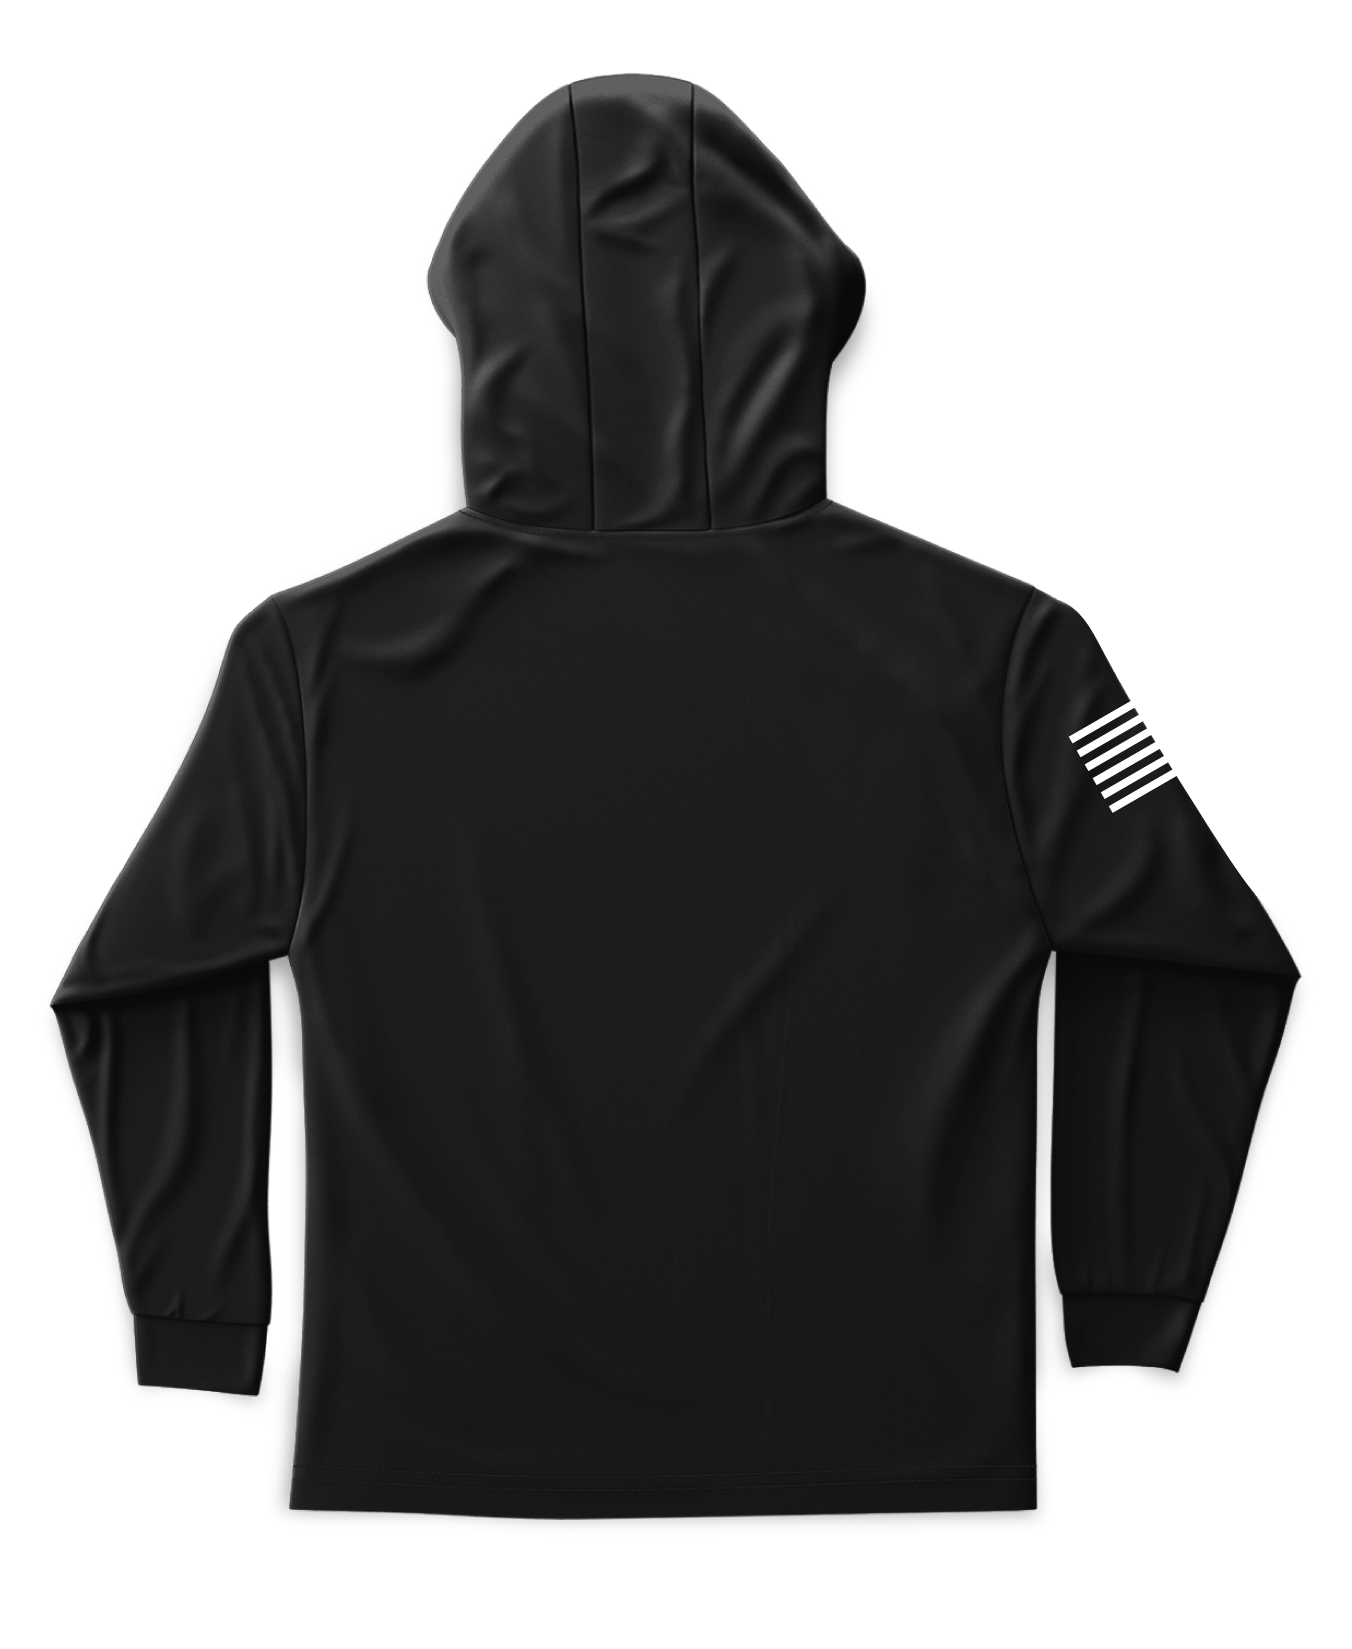 Core Men's Hooded Performance Sweatshirt - Original - Black/White